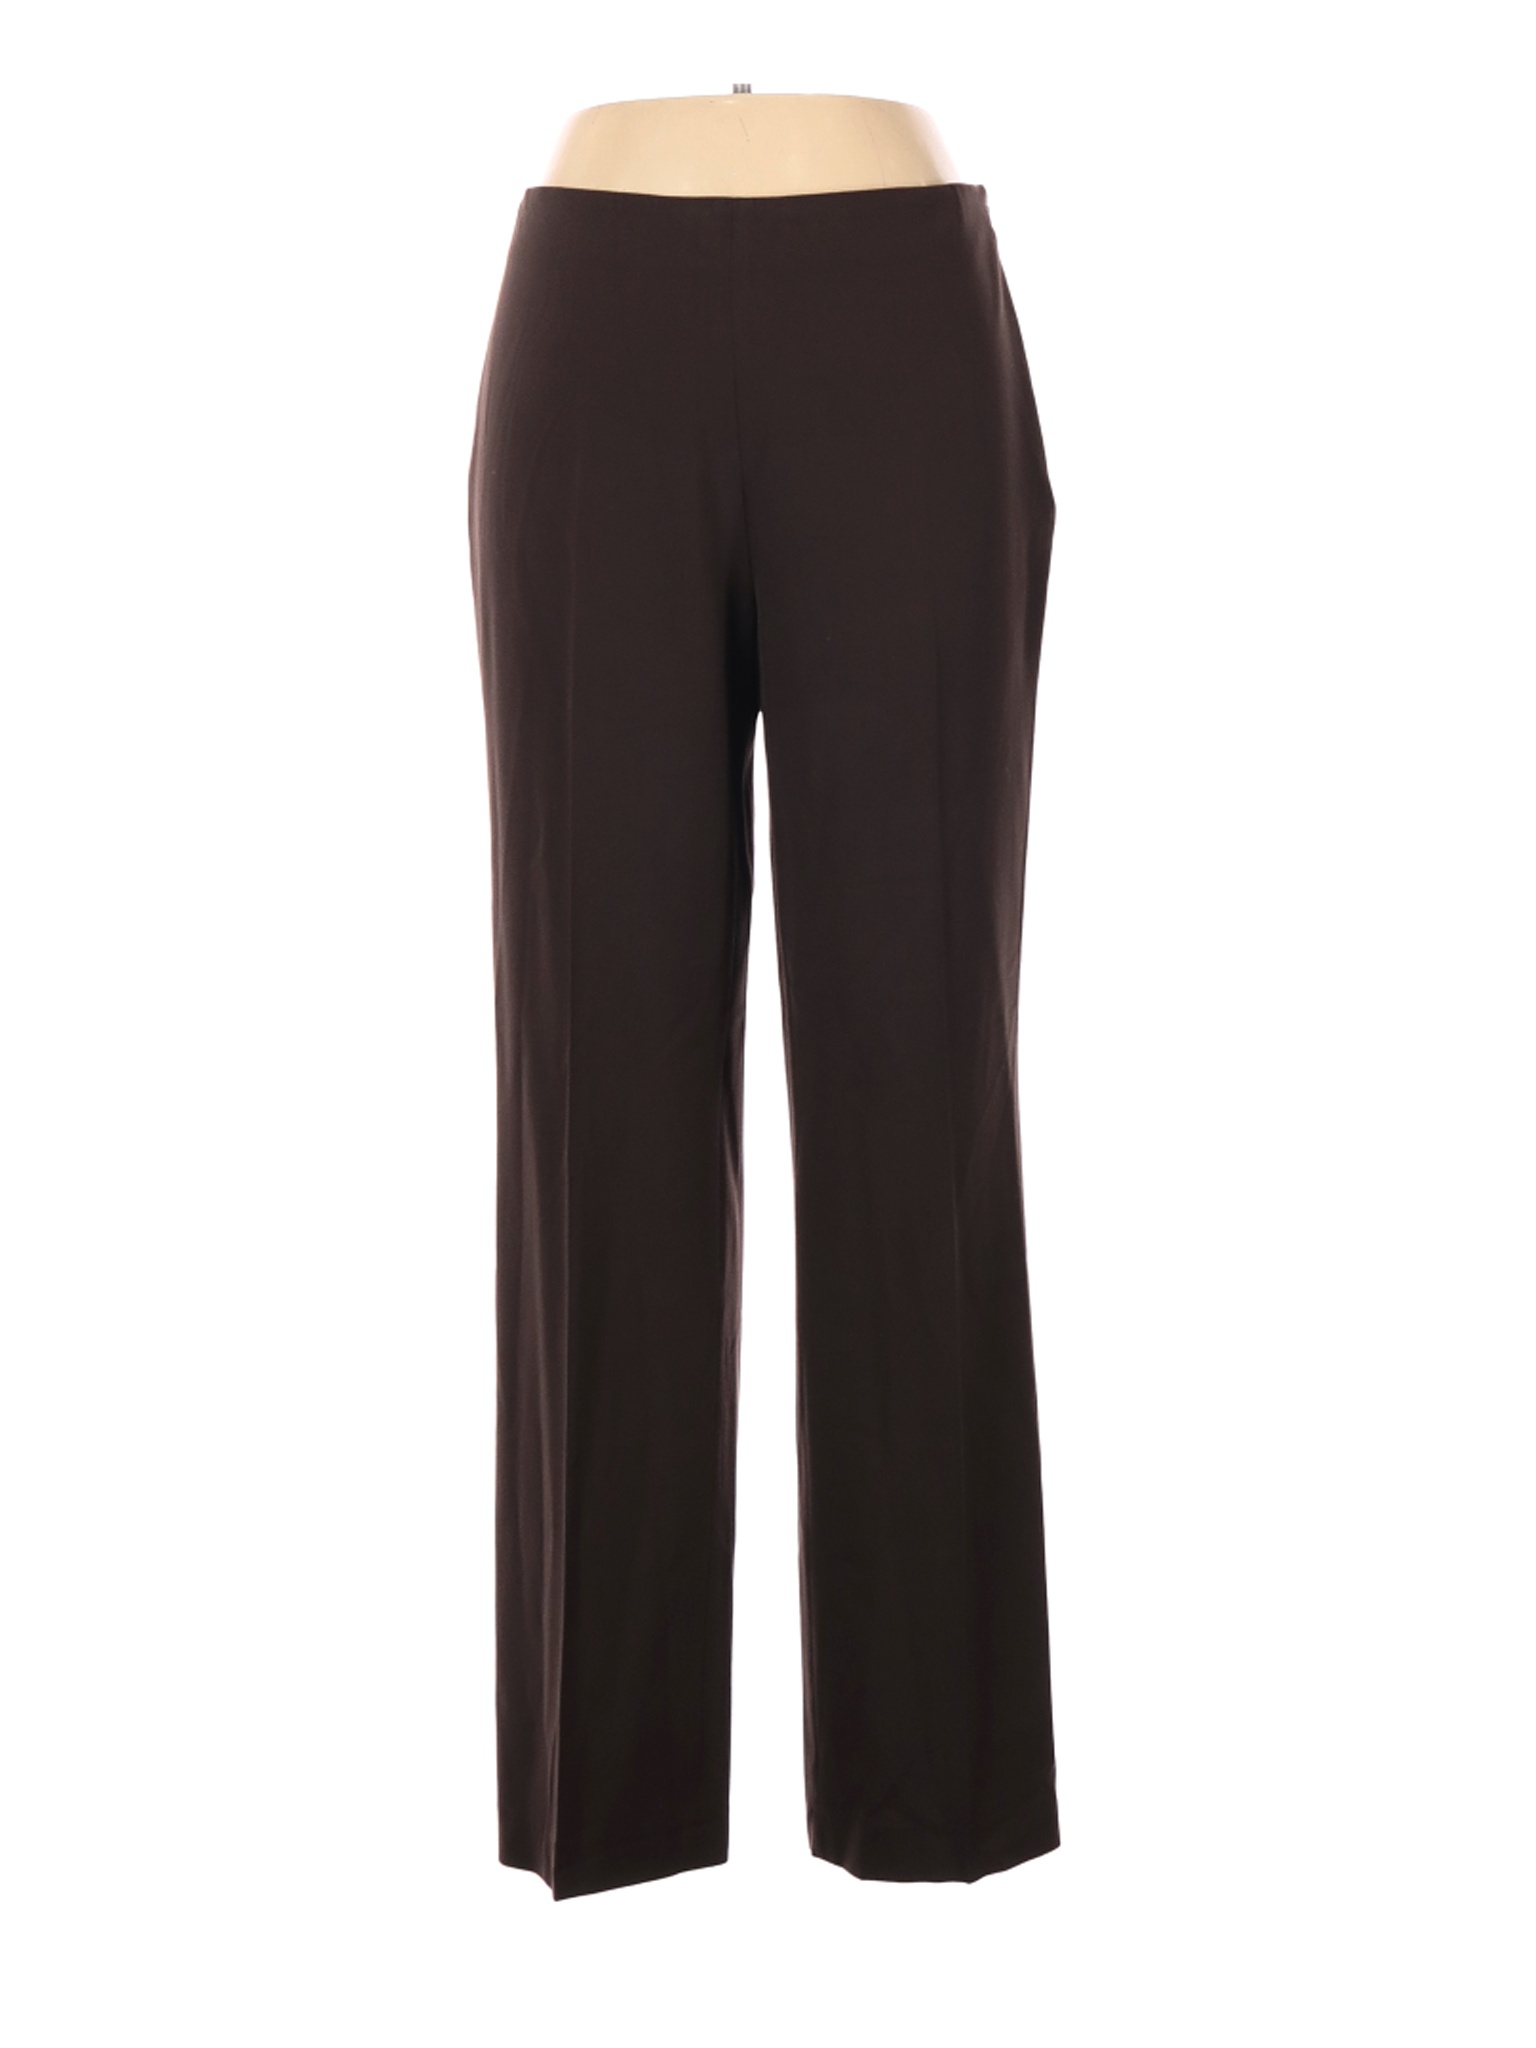 Talbots Women Brown Casual Pants 10 | eBay